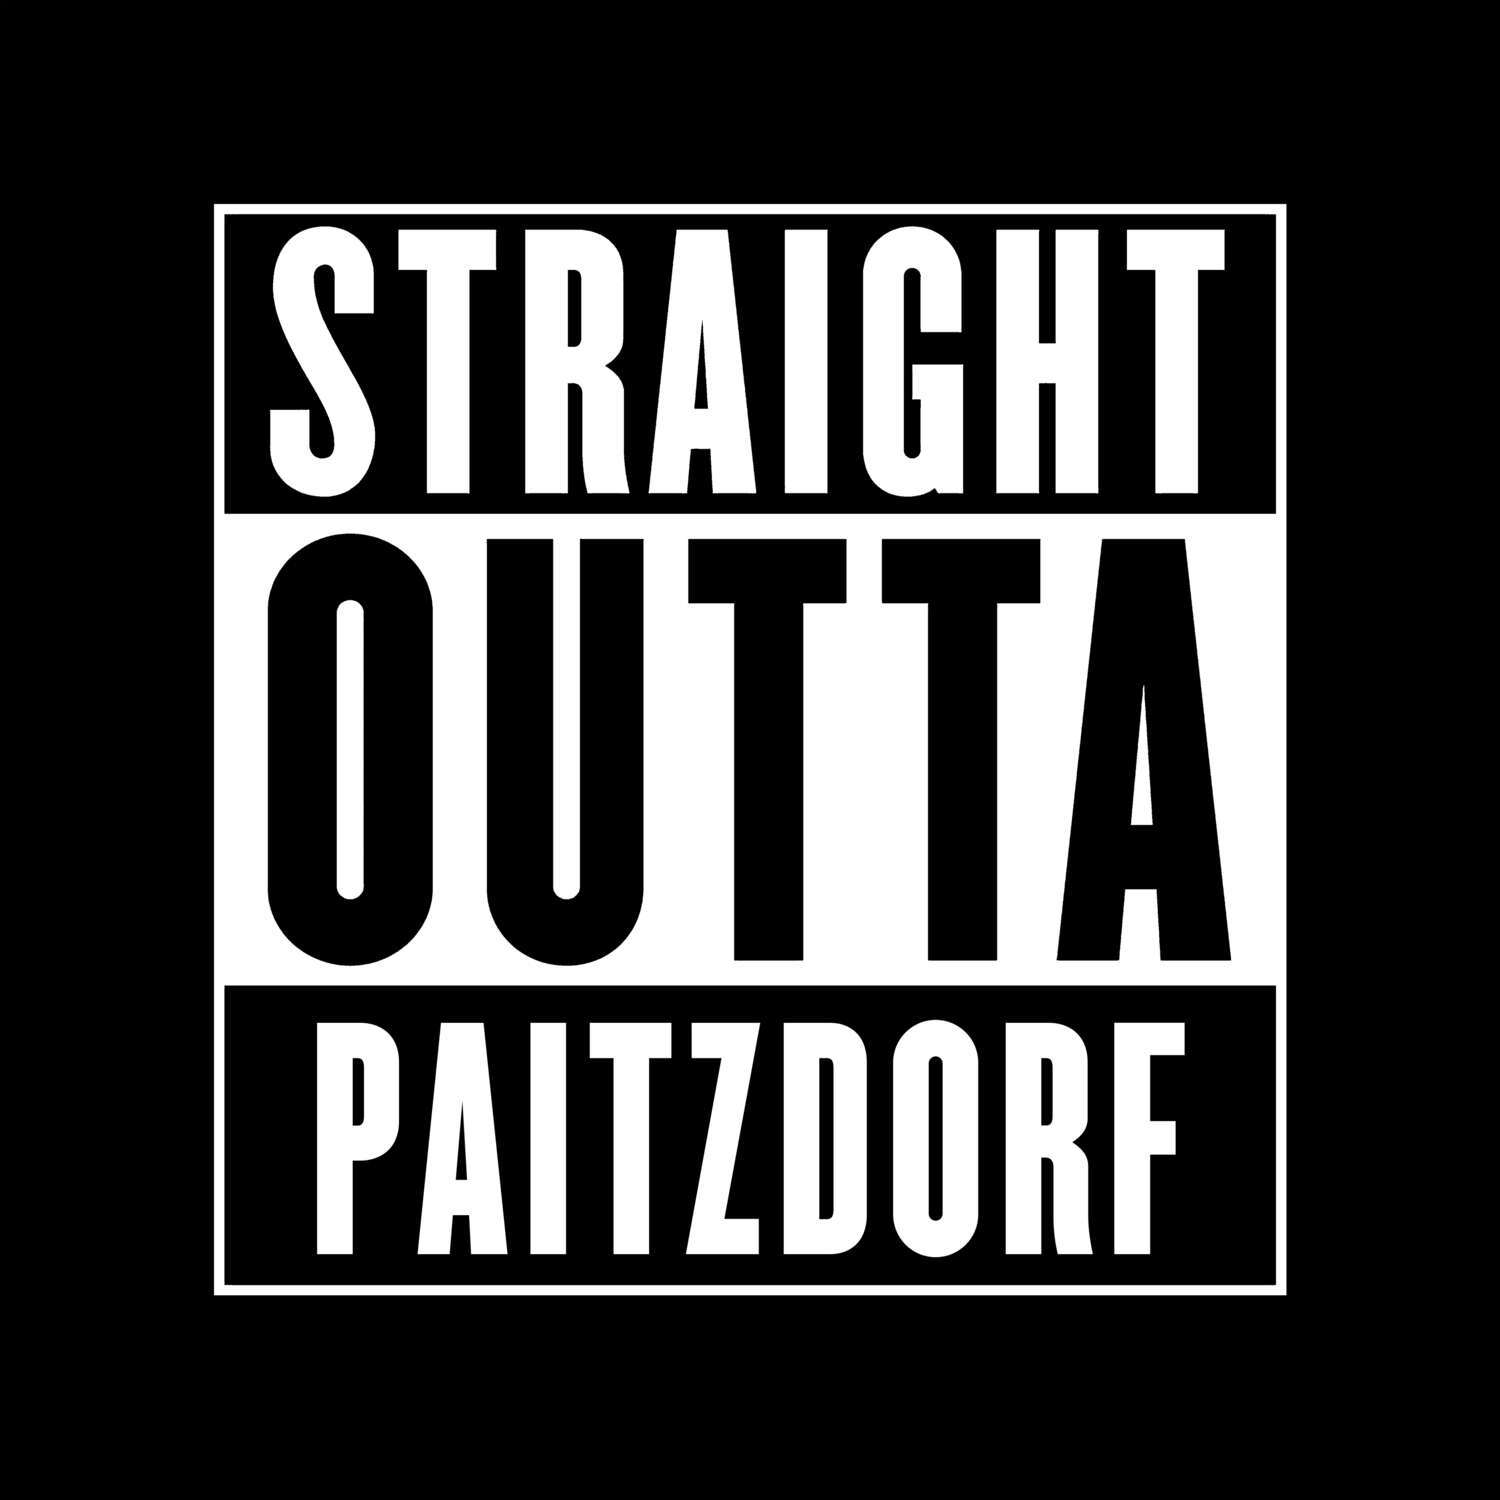 Paitzdorf T-Shirt »Straight Outta«